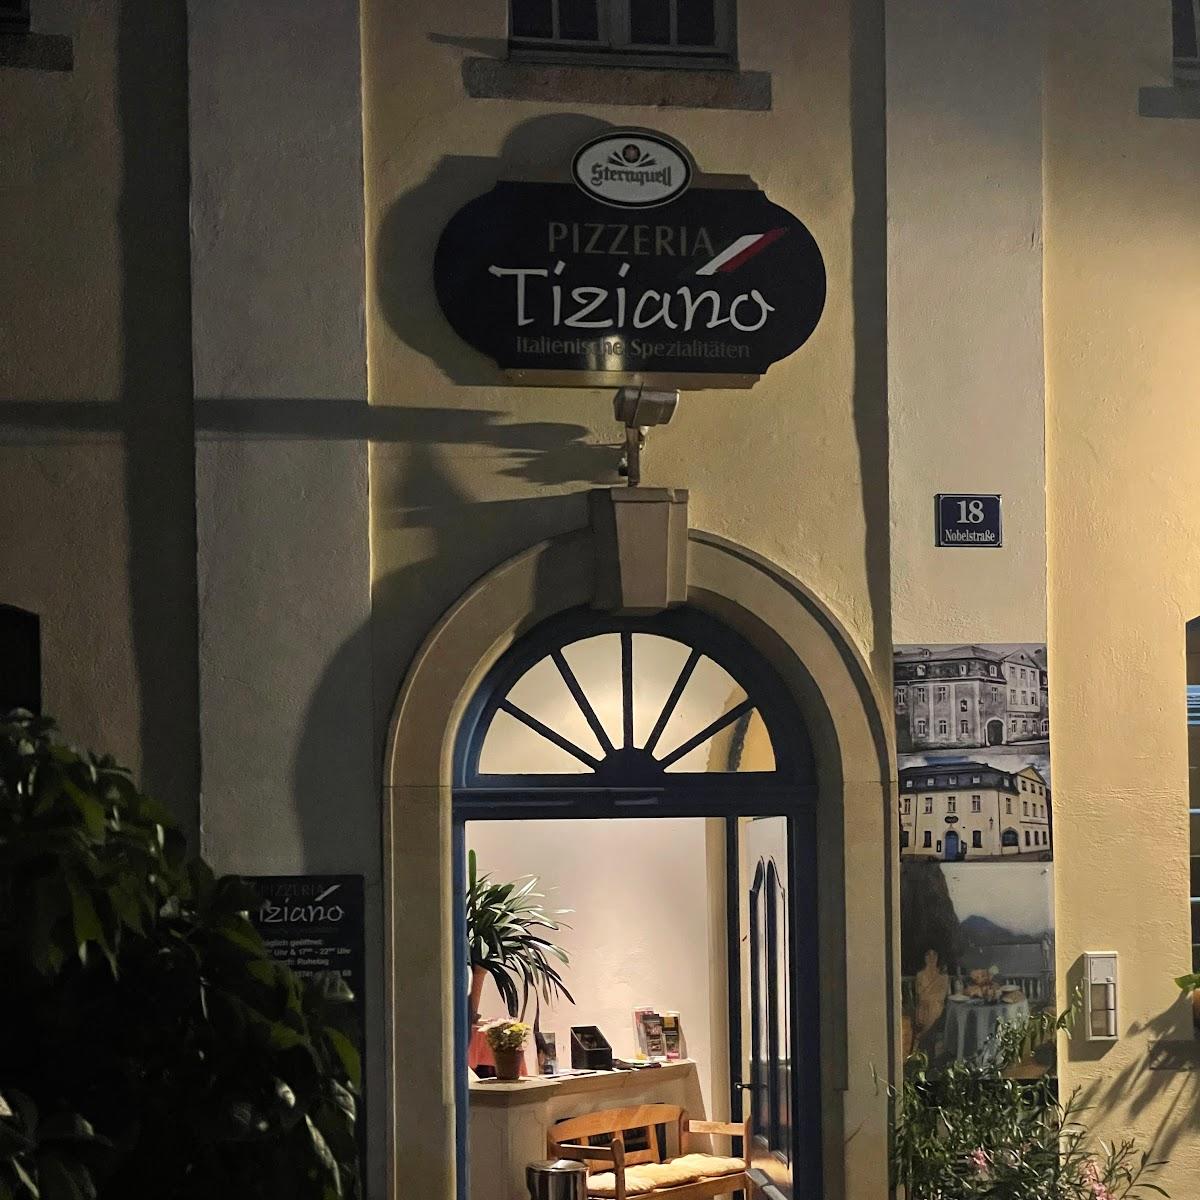 Restaurant "Pizzeria Tiziano" in Plauen